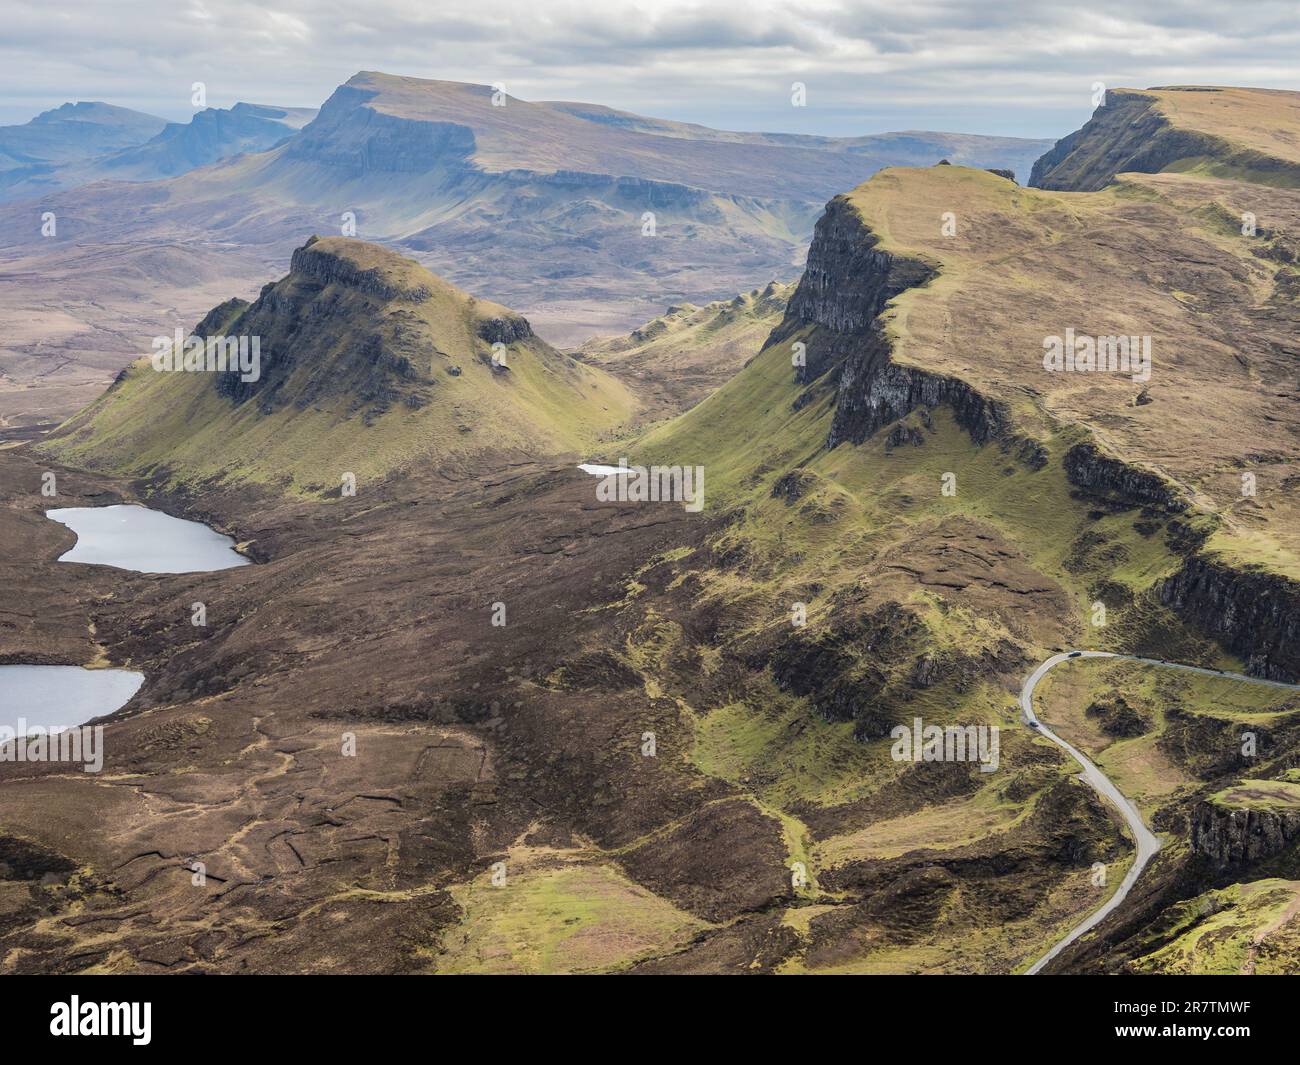 View of the Quiraing rock formations, Trotternish peninsula, Isle of Skye, Scotland, UK Stock Photo